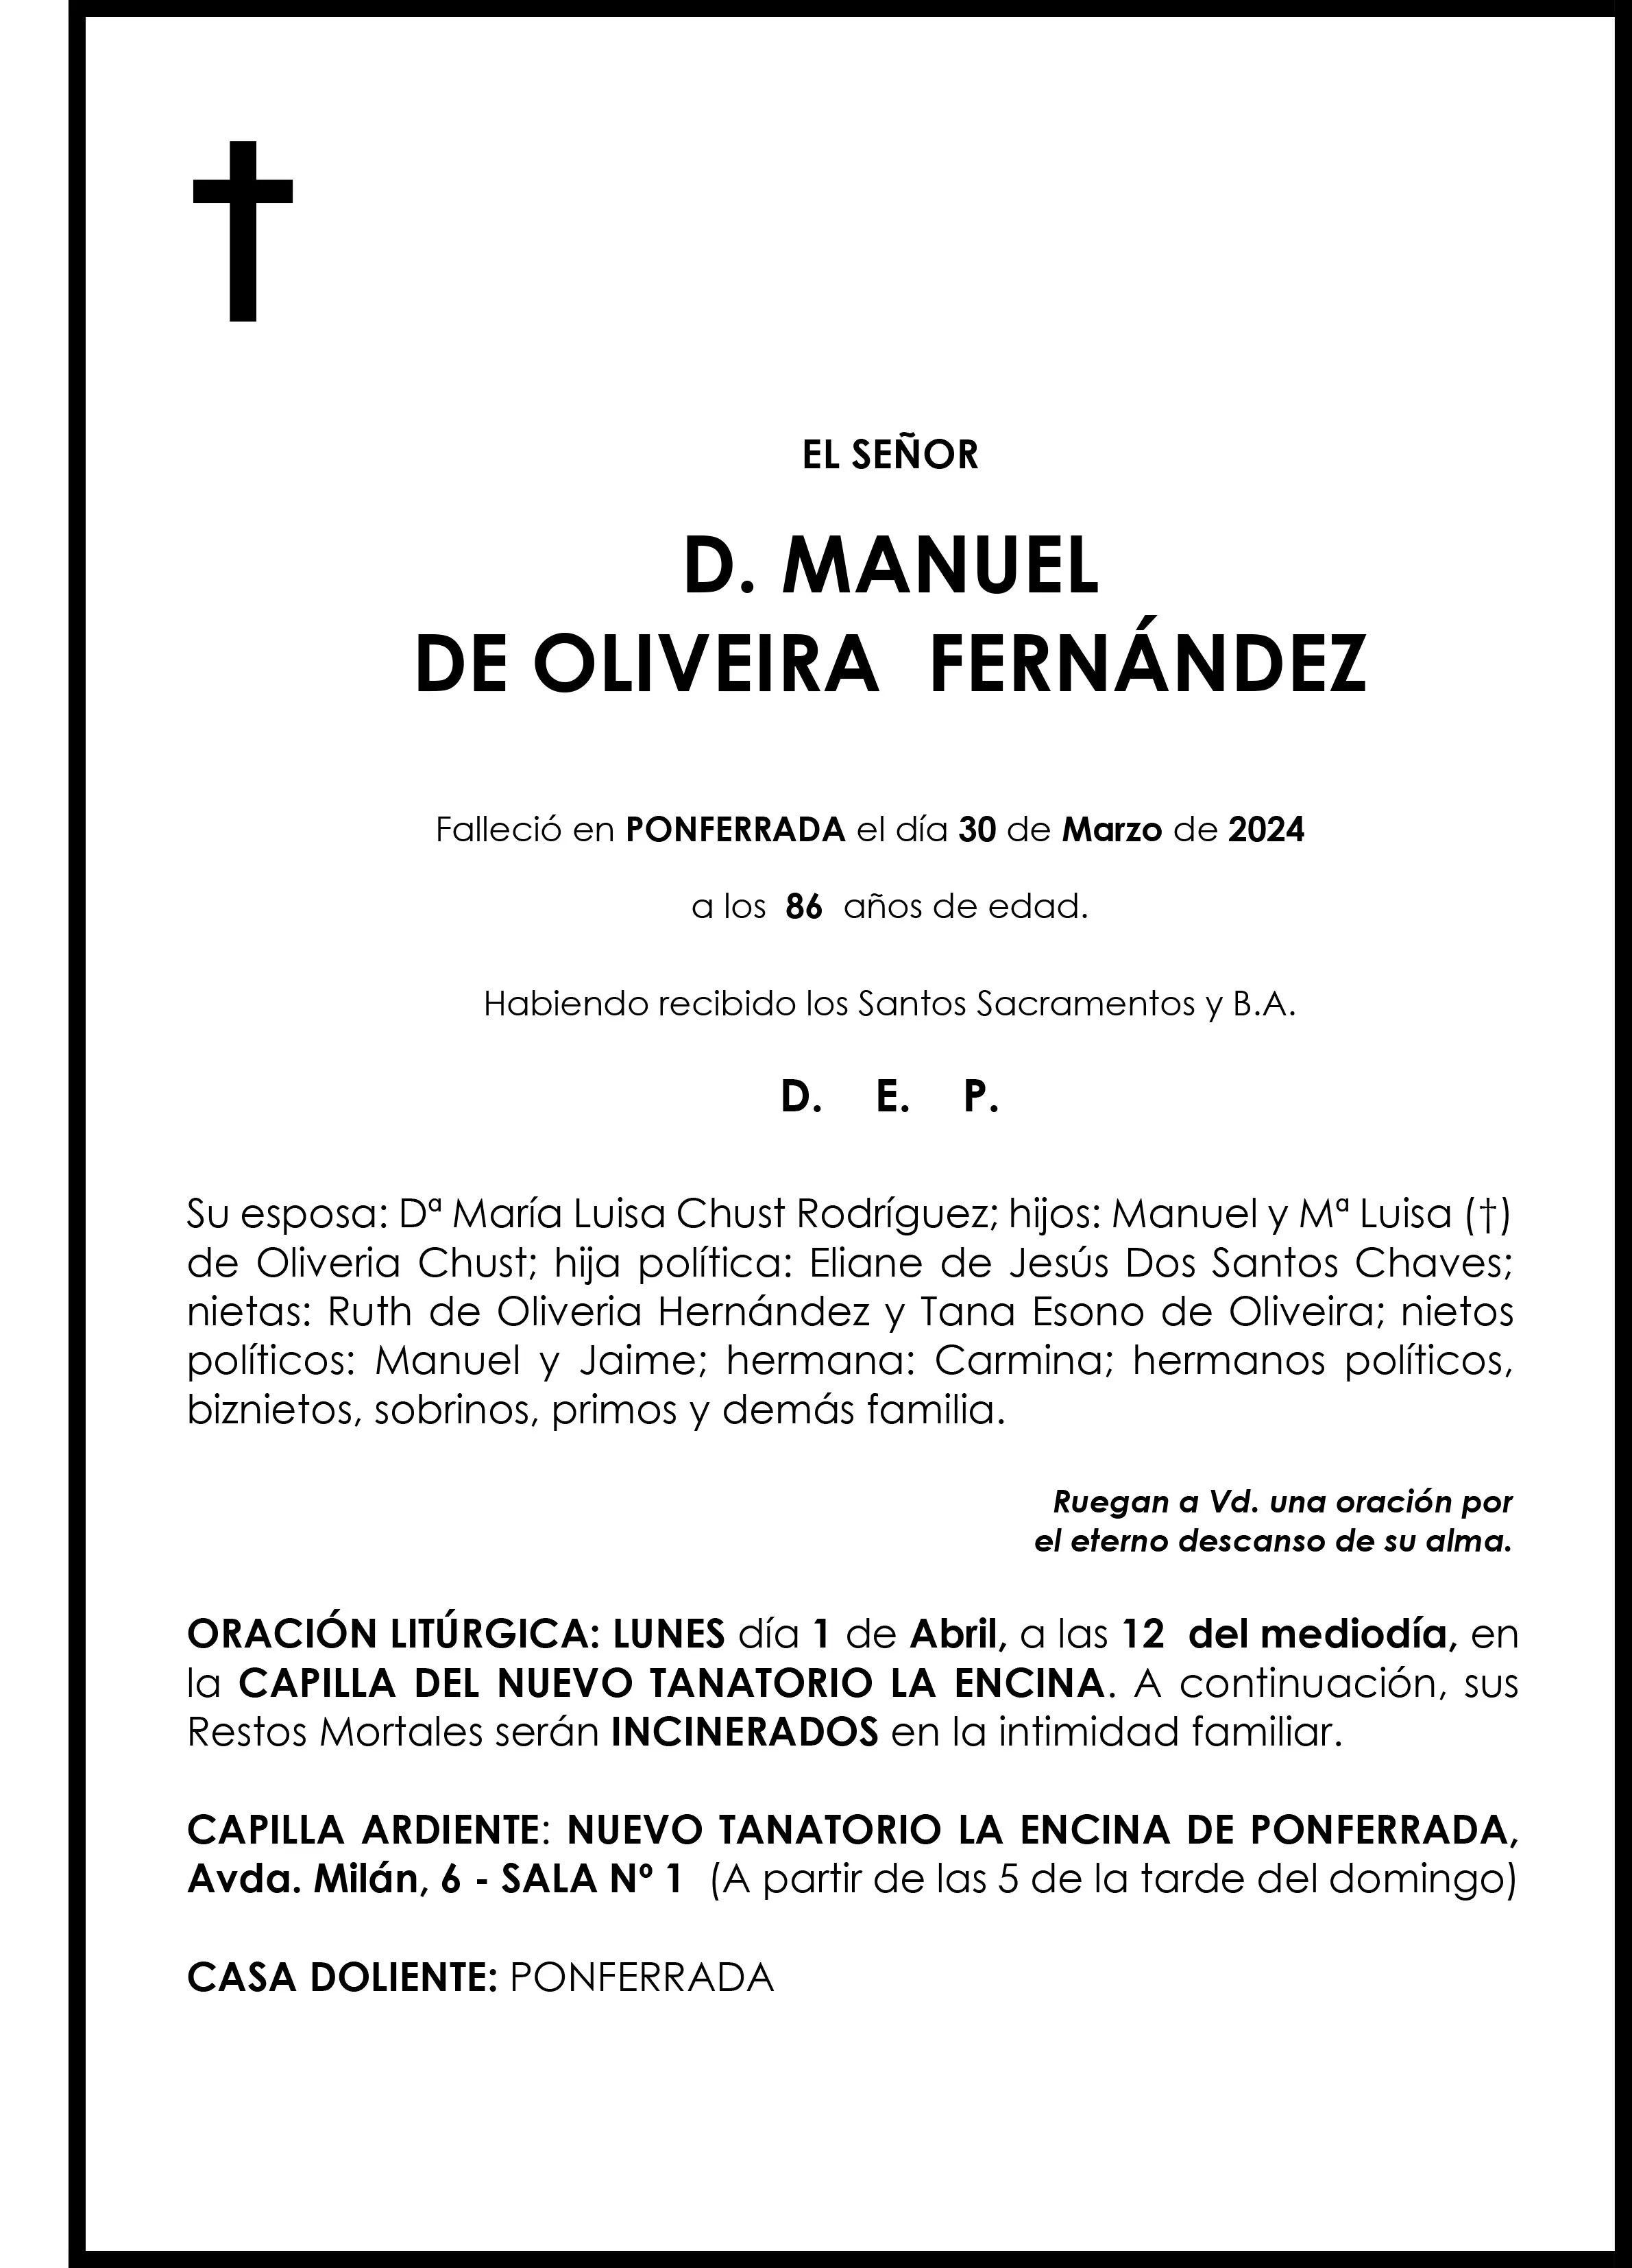 MANUEL DE OLIVEIRA FERNANDEZ